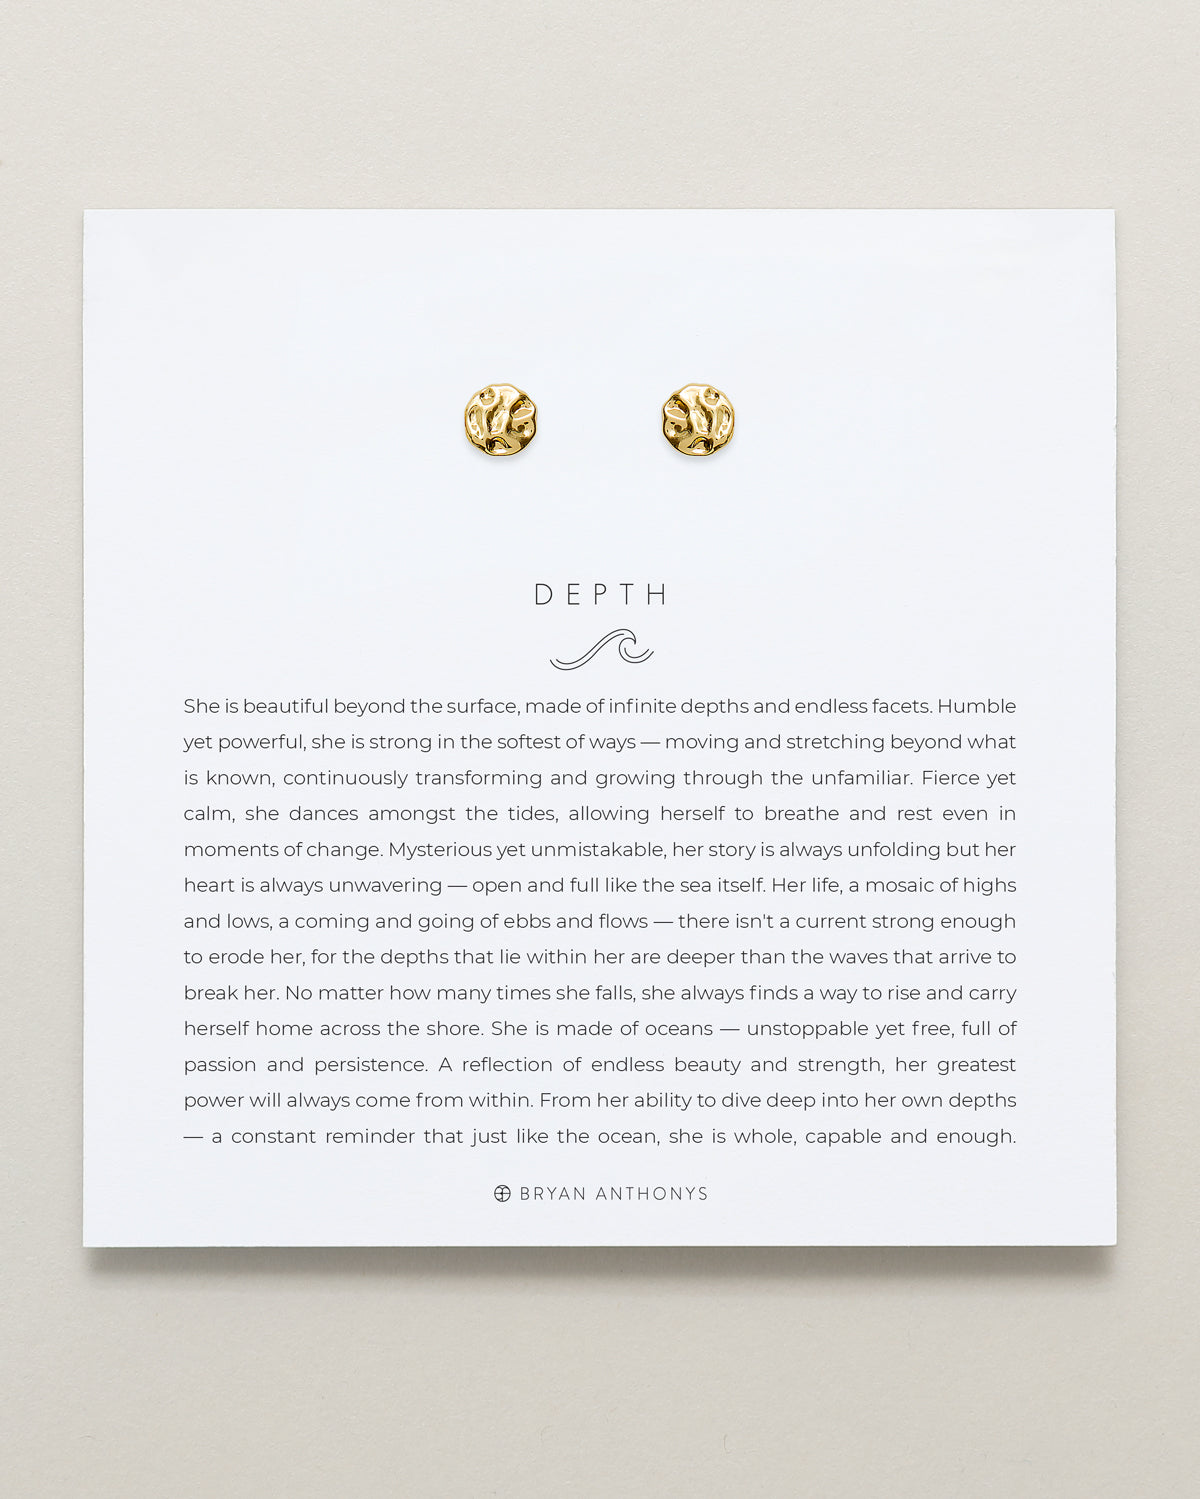 Bryan Anthonys Gold Depth Stud Earrings On Card